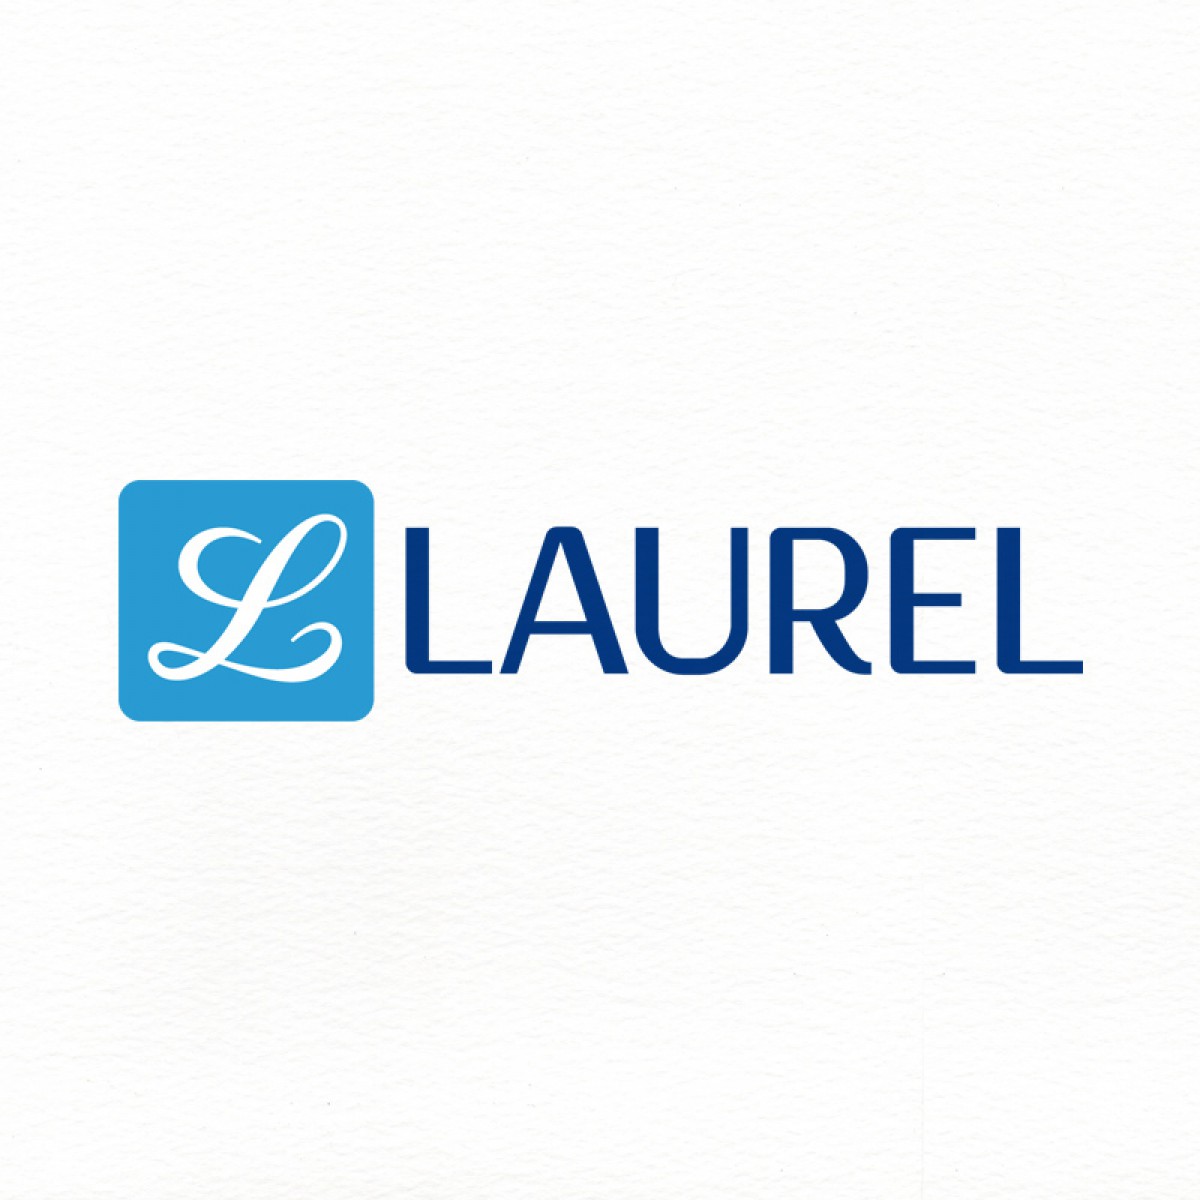 Laurel logó redesign